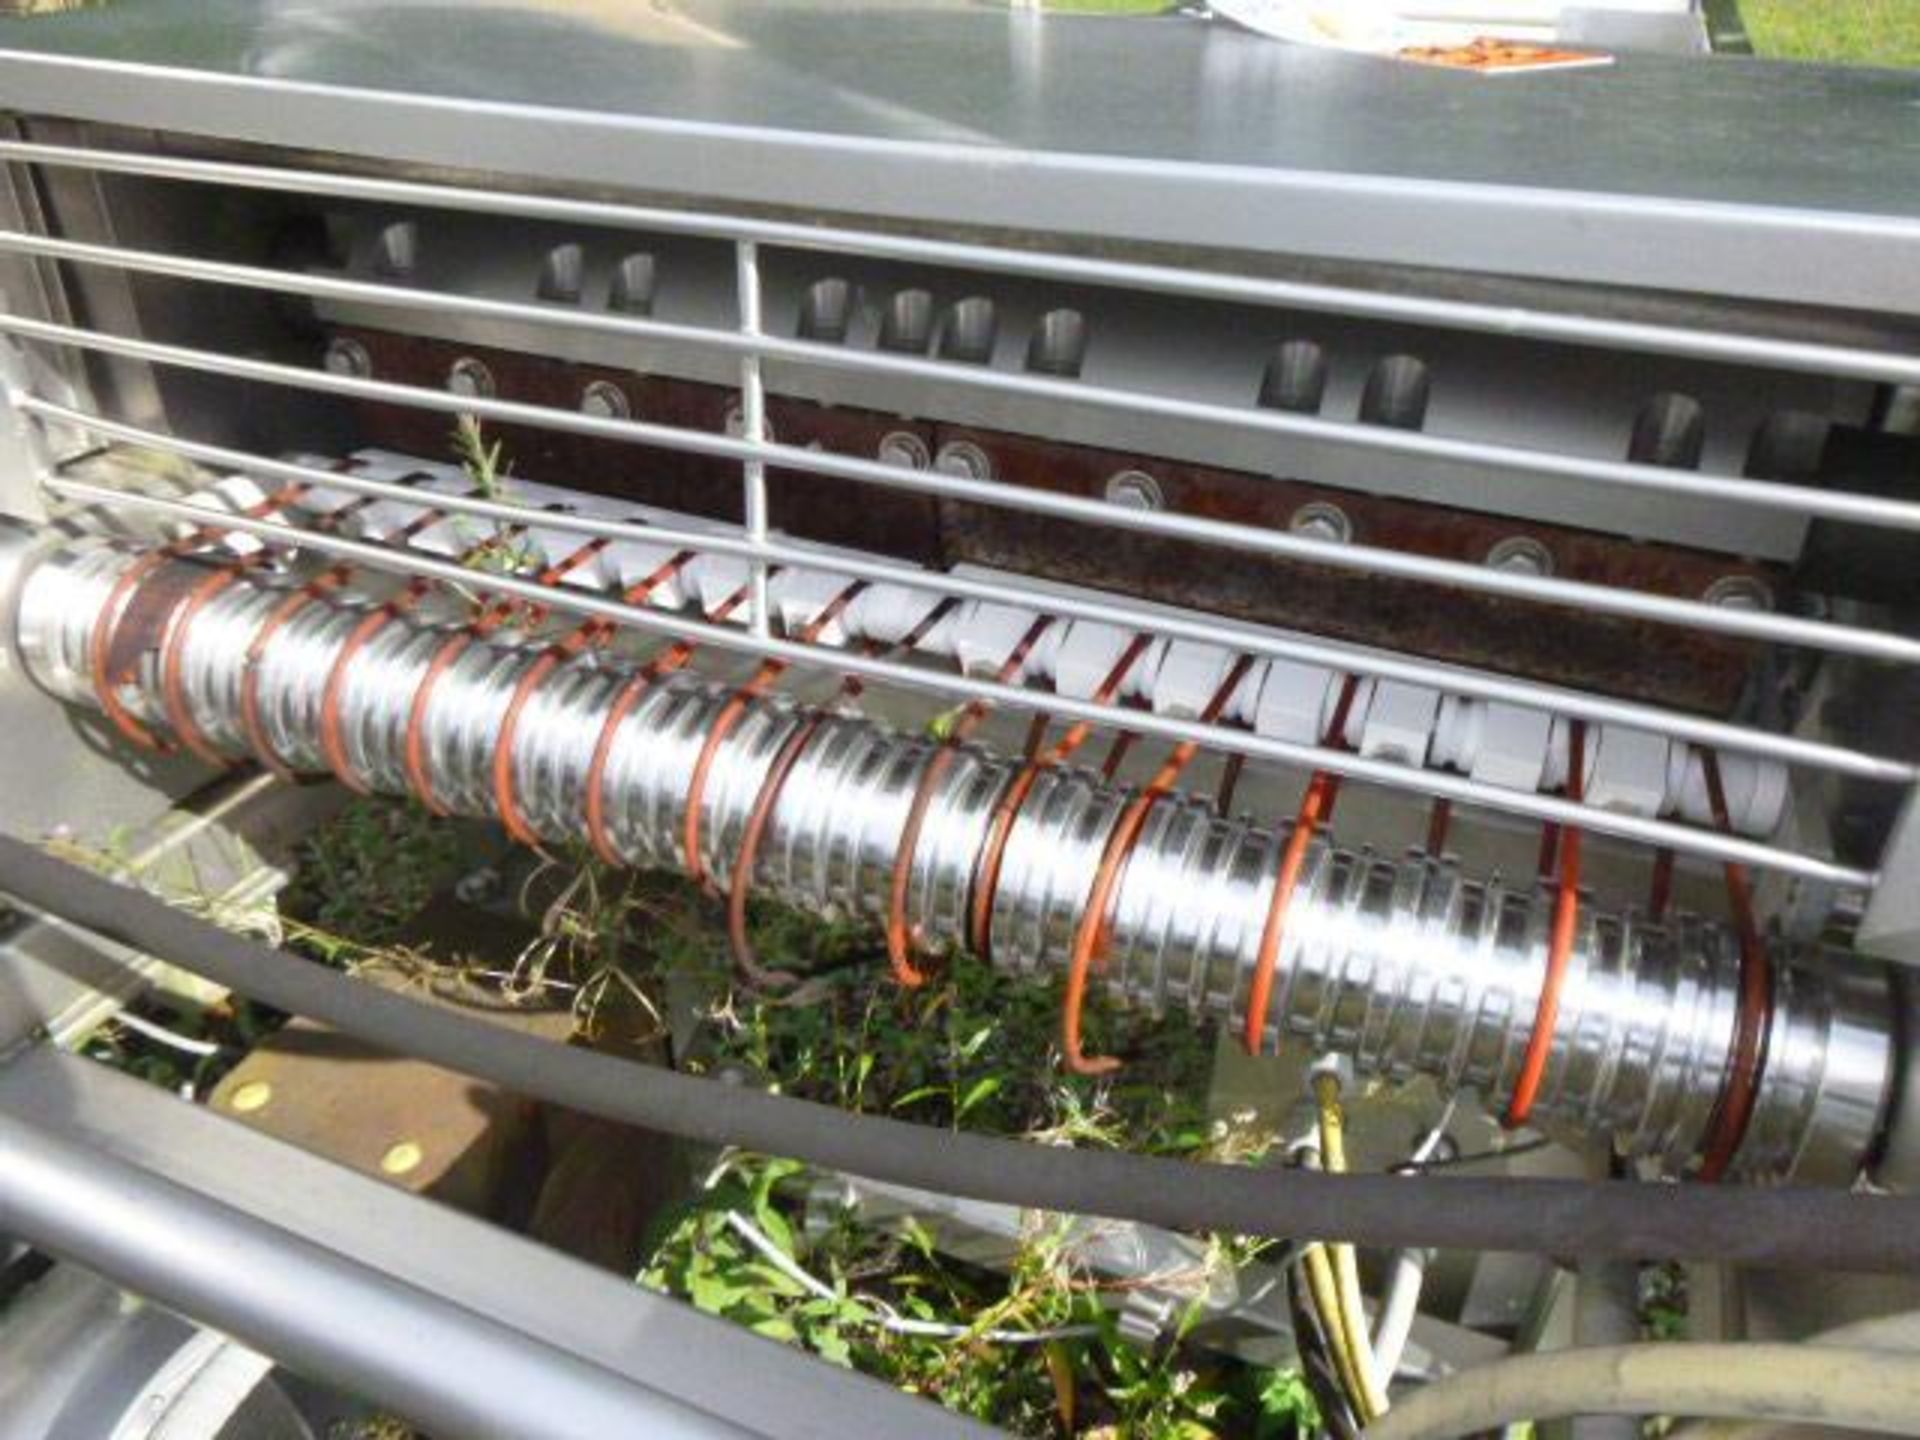 Grote conveyor model #PFC-24 - Image 5 of 6